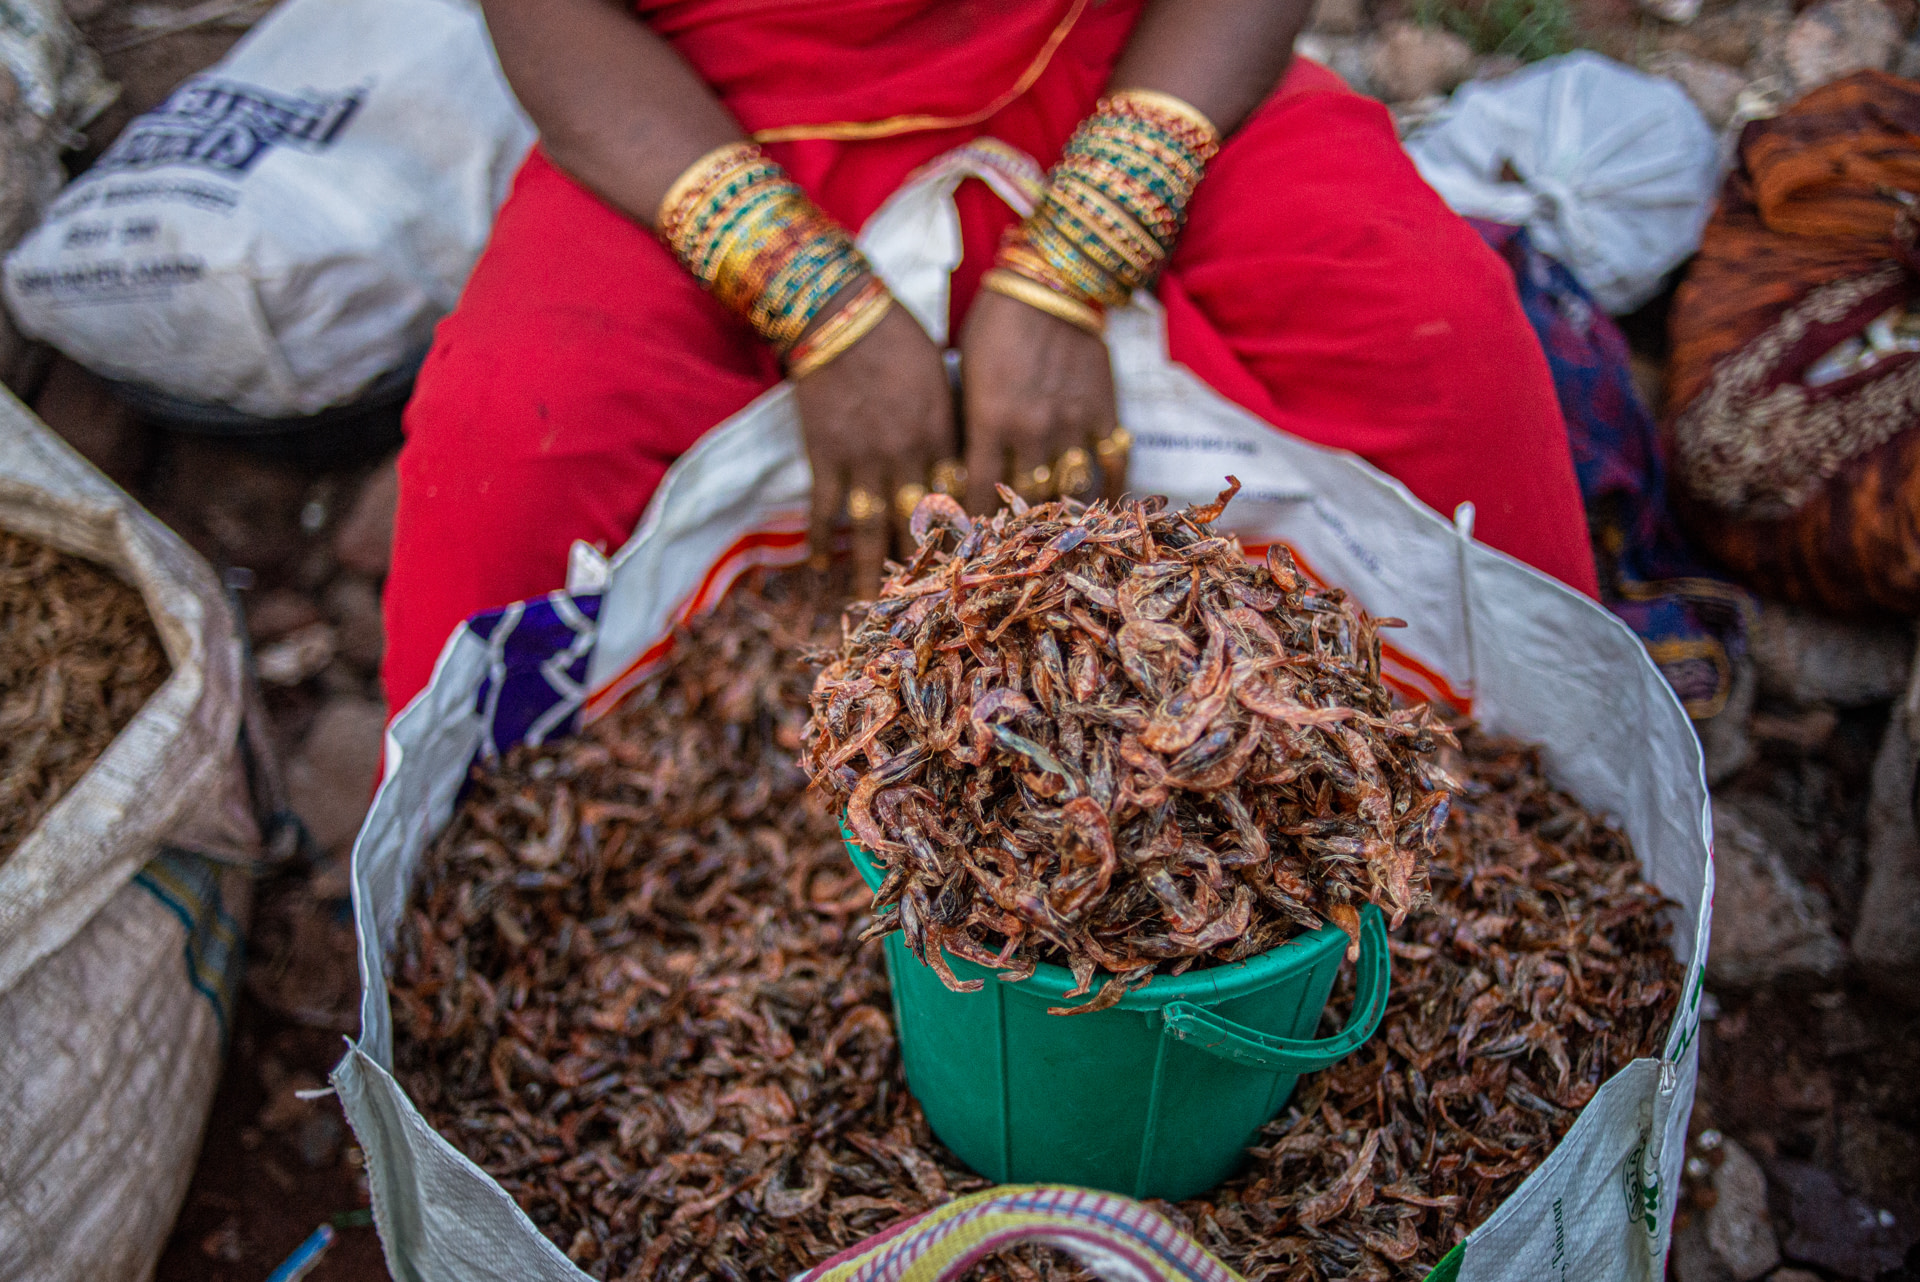 A female fishmonger sells dried shrimps in bulk at an early morning fish market. Matlapalem, Andhra Pradesh, India, 2022. S. Chakrabarti / We Animals Media